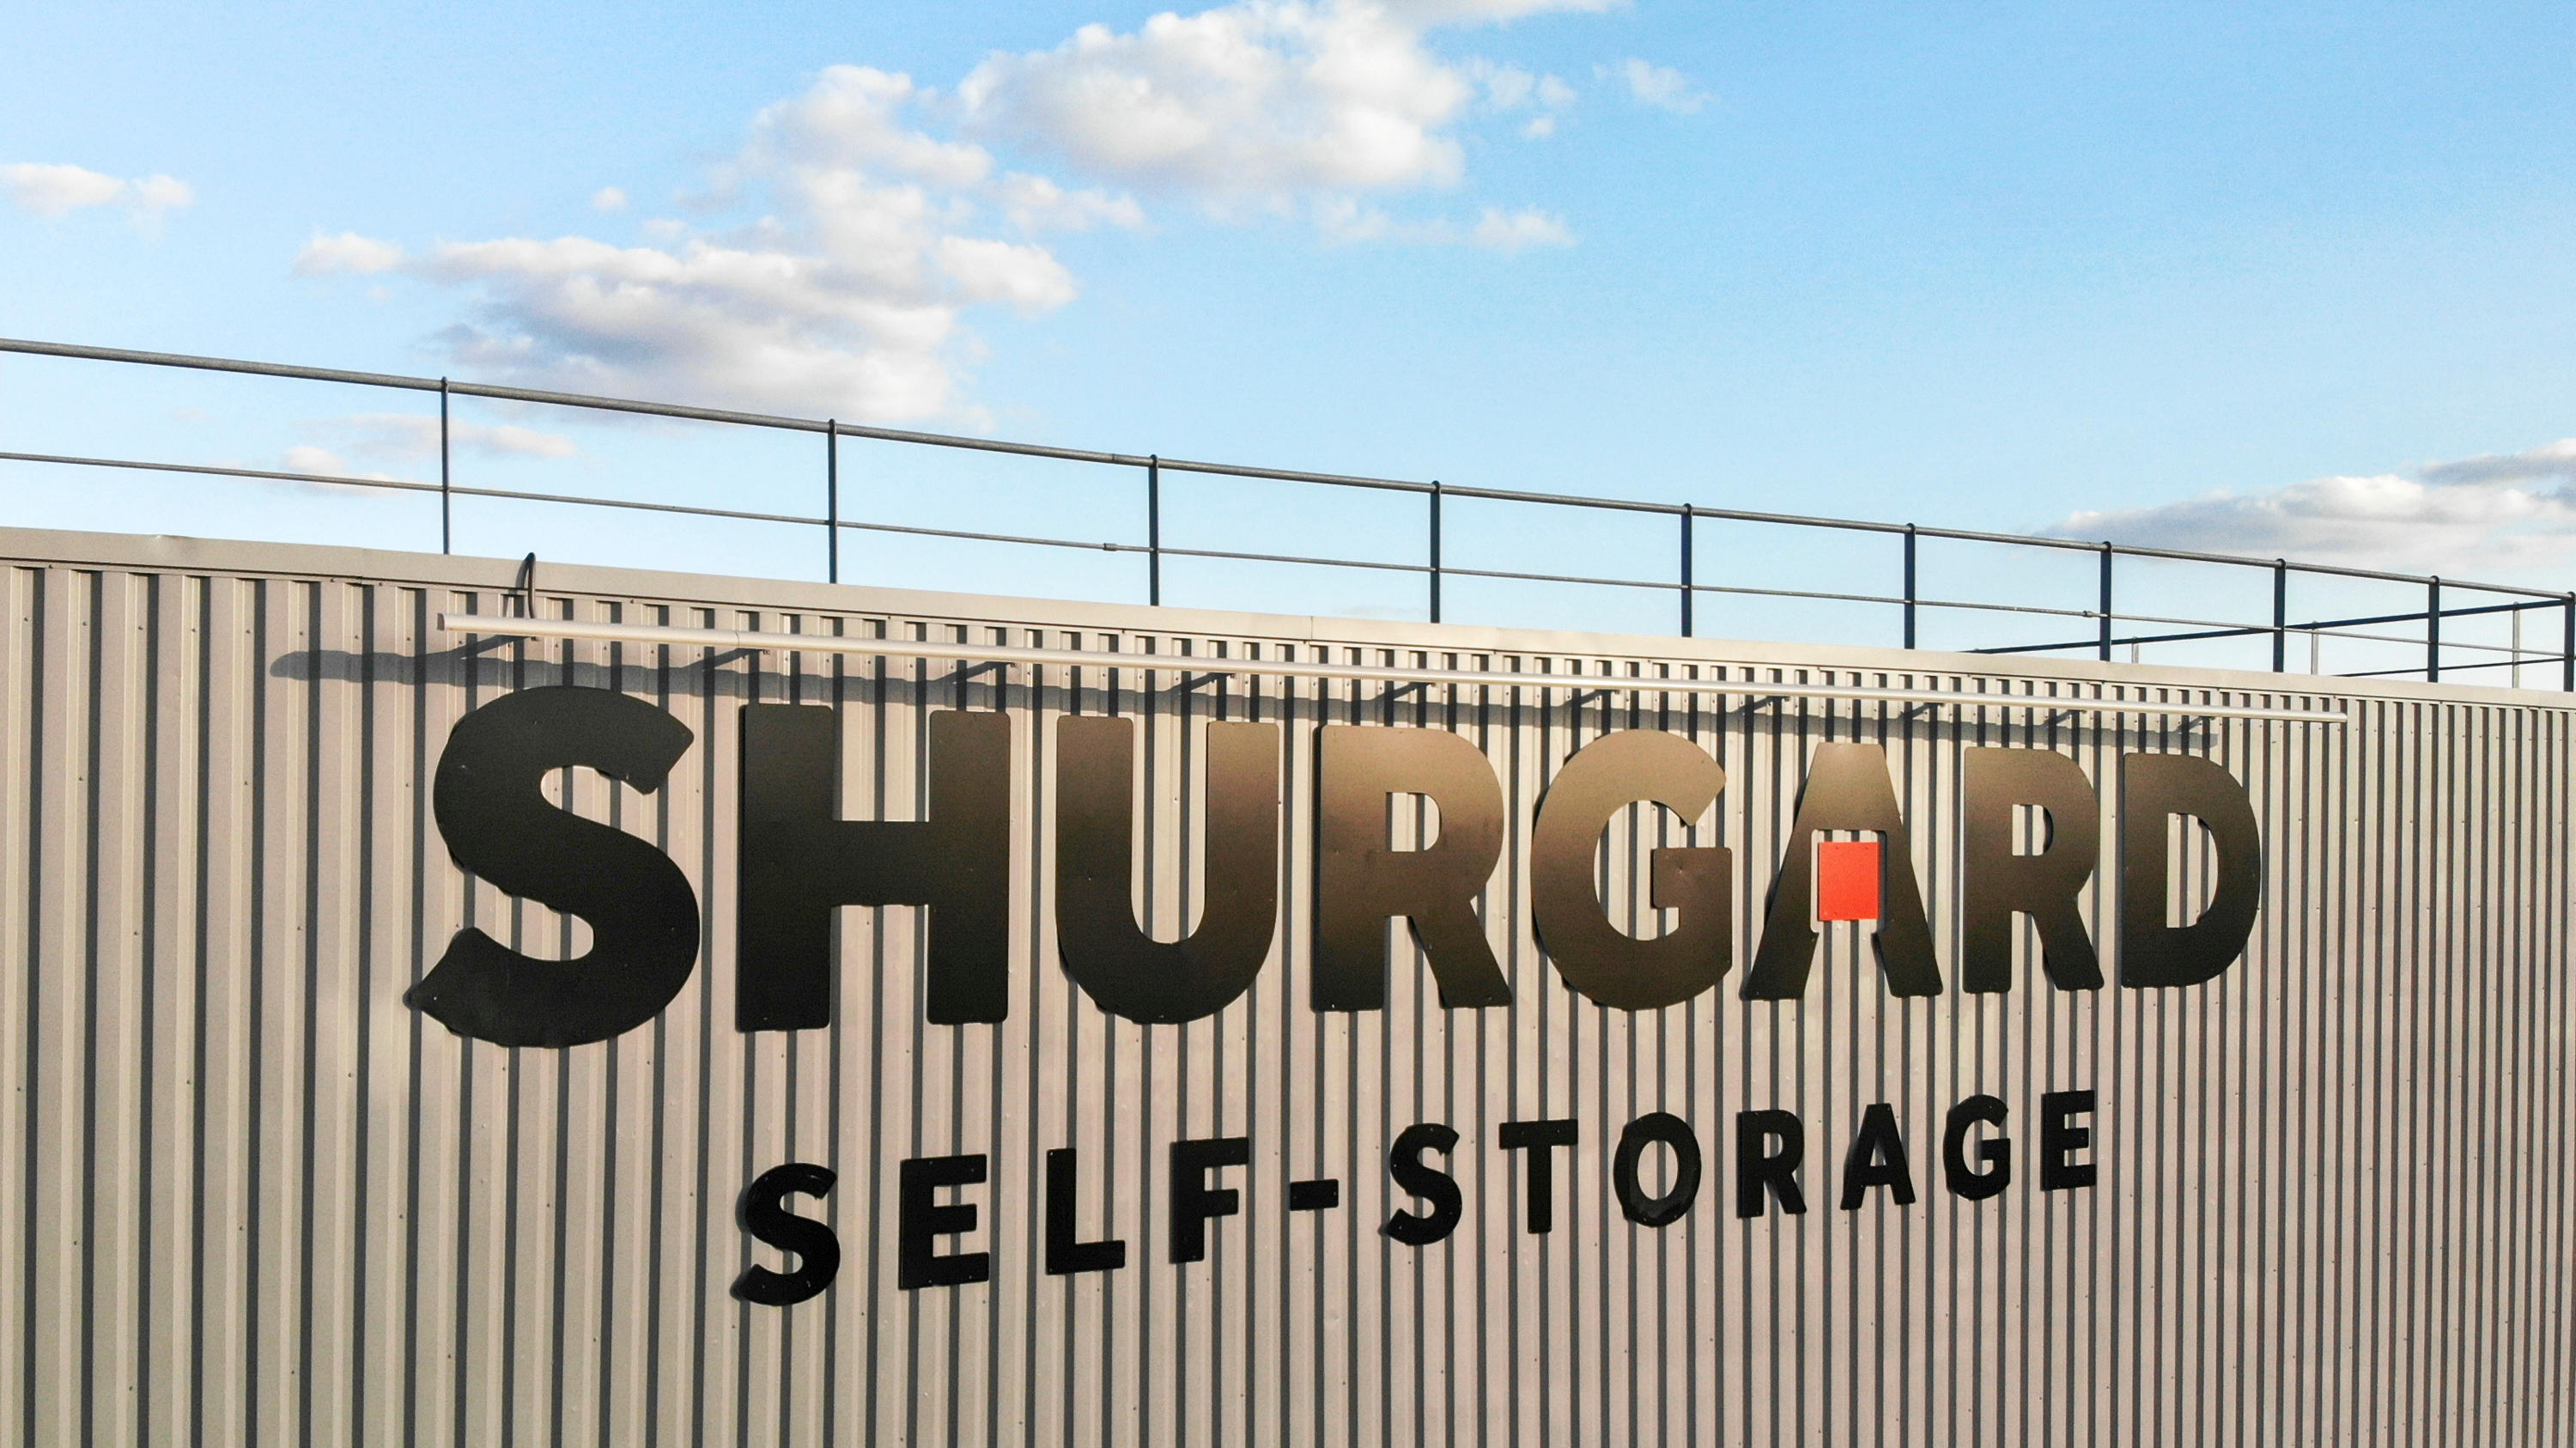 Images Shurgard Self Storage Montigny-le-Bretonneux